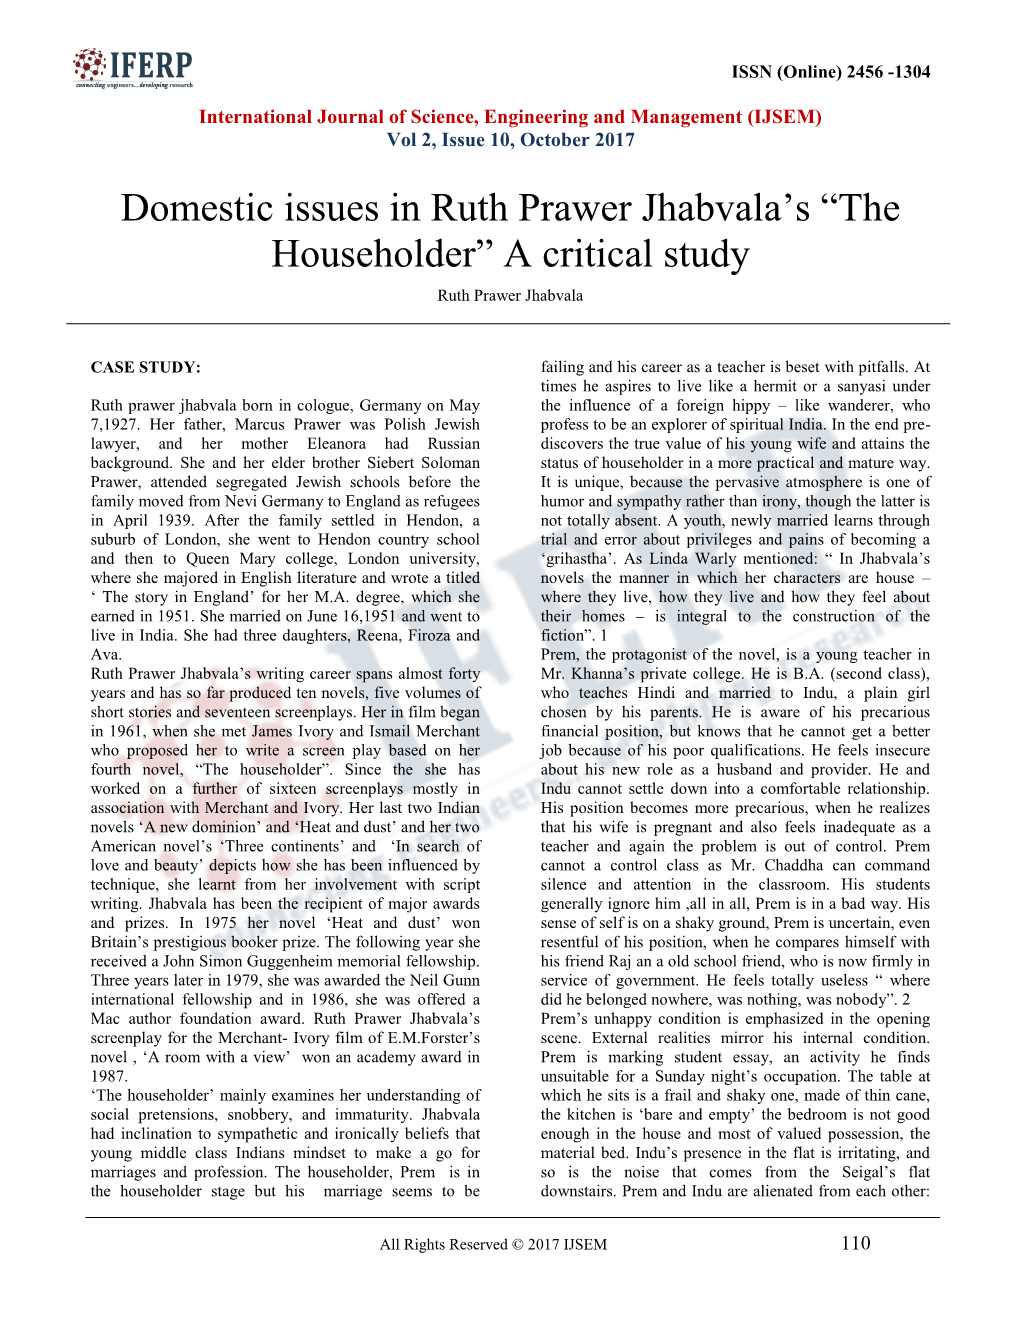 Domestic Issues in Ruth Prawer Jhabvala‟S “The Householder” a Critical Study Ruth Prawer Jhabvala